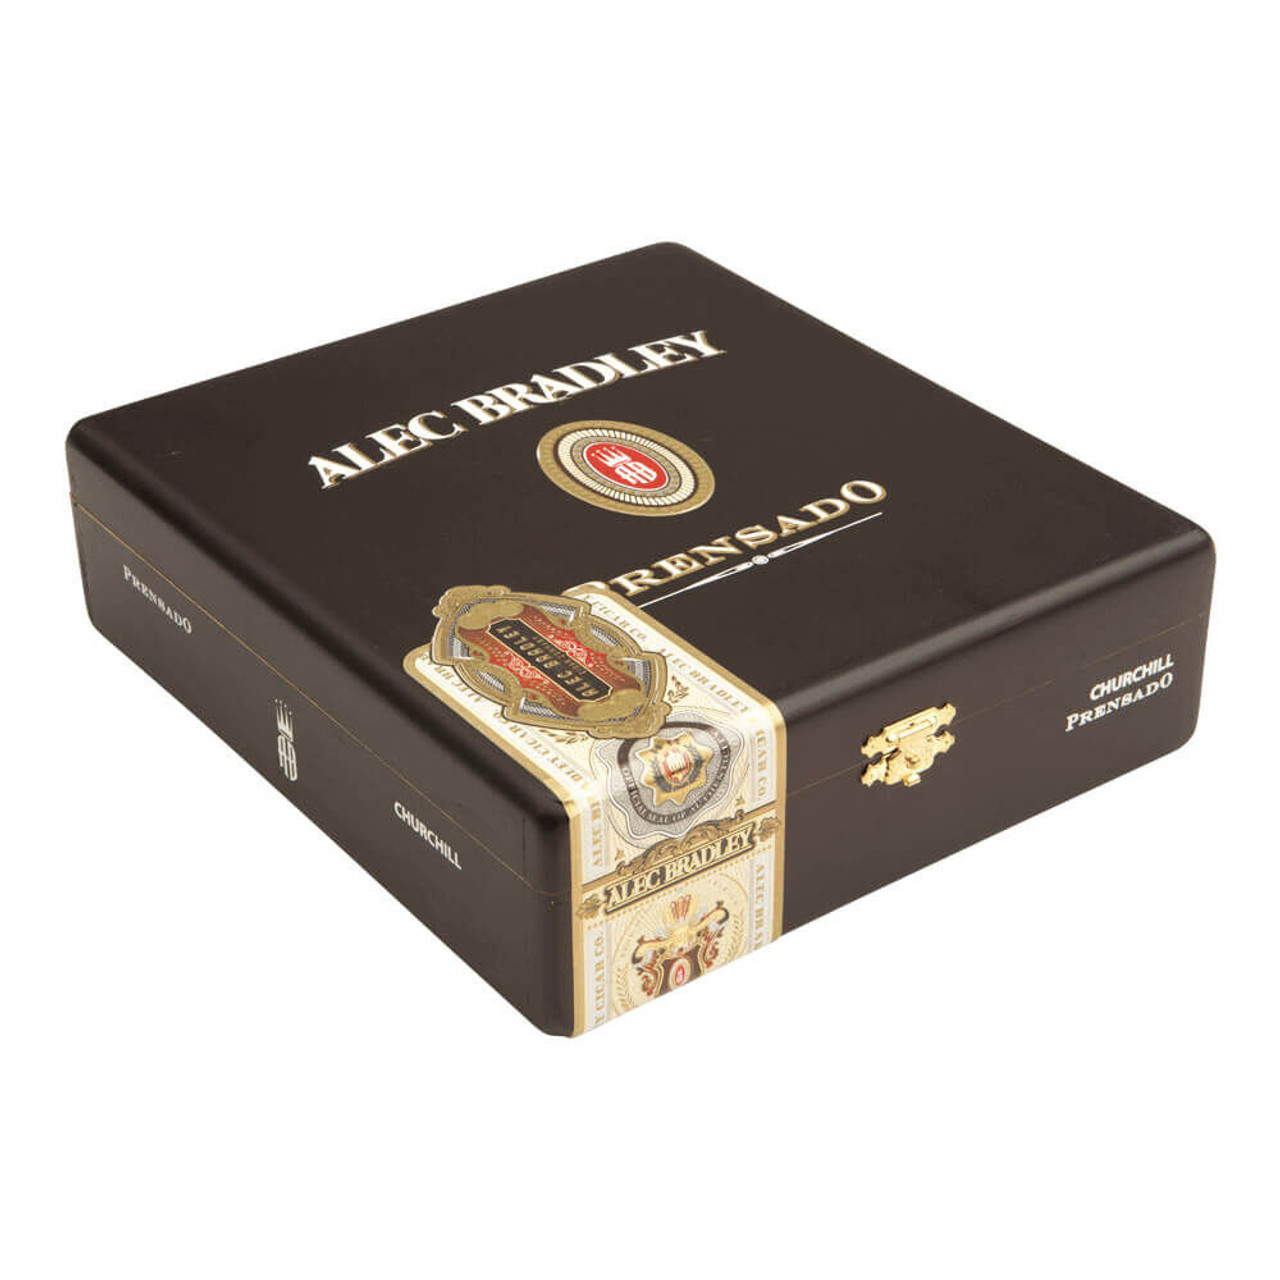 Alec Bradley Prensado Churchill Cigars - 7 x 48 (Box of 24) *Box